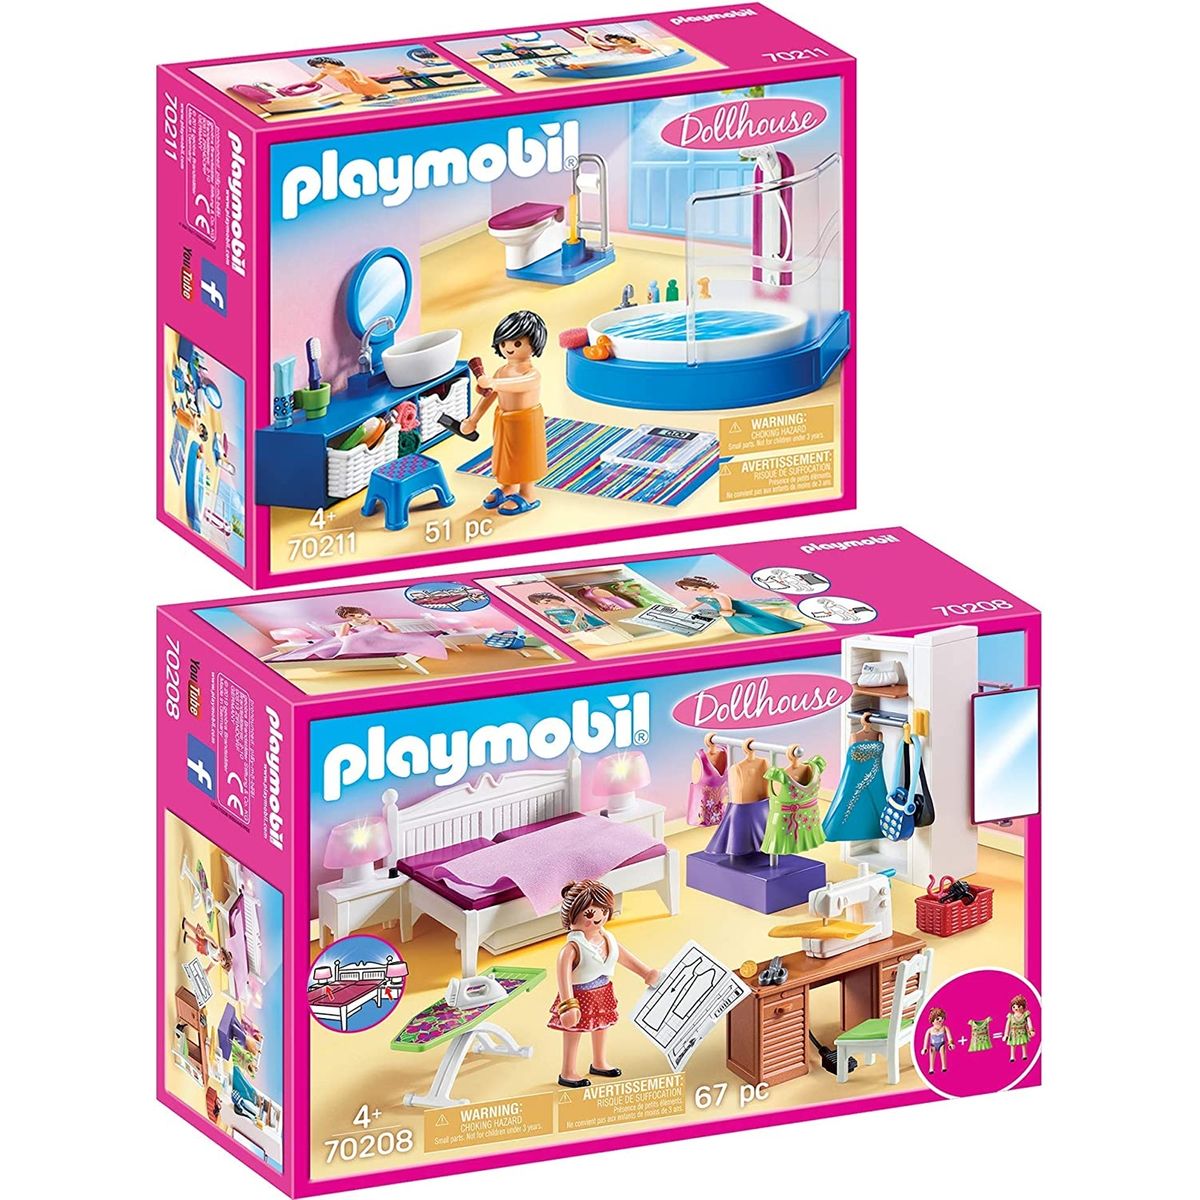 Dollhouse – 70208+70211 Playmobil